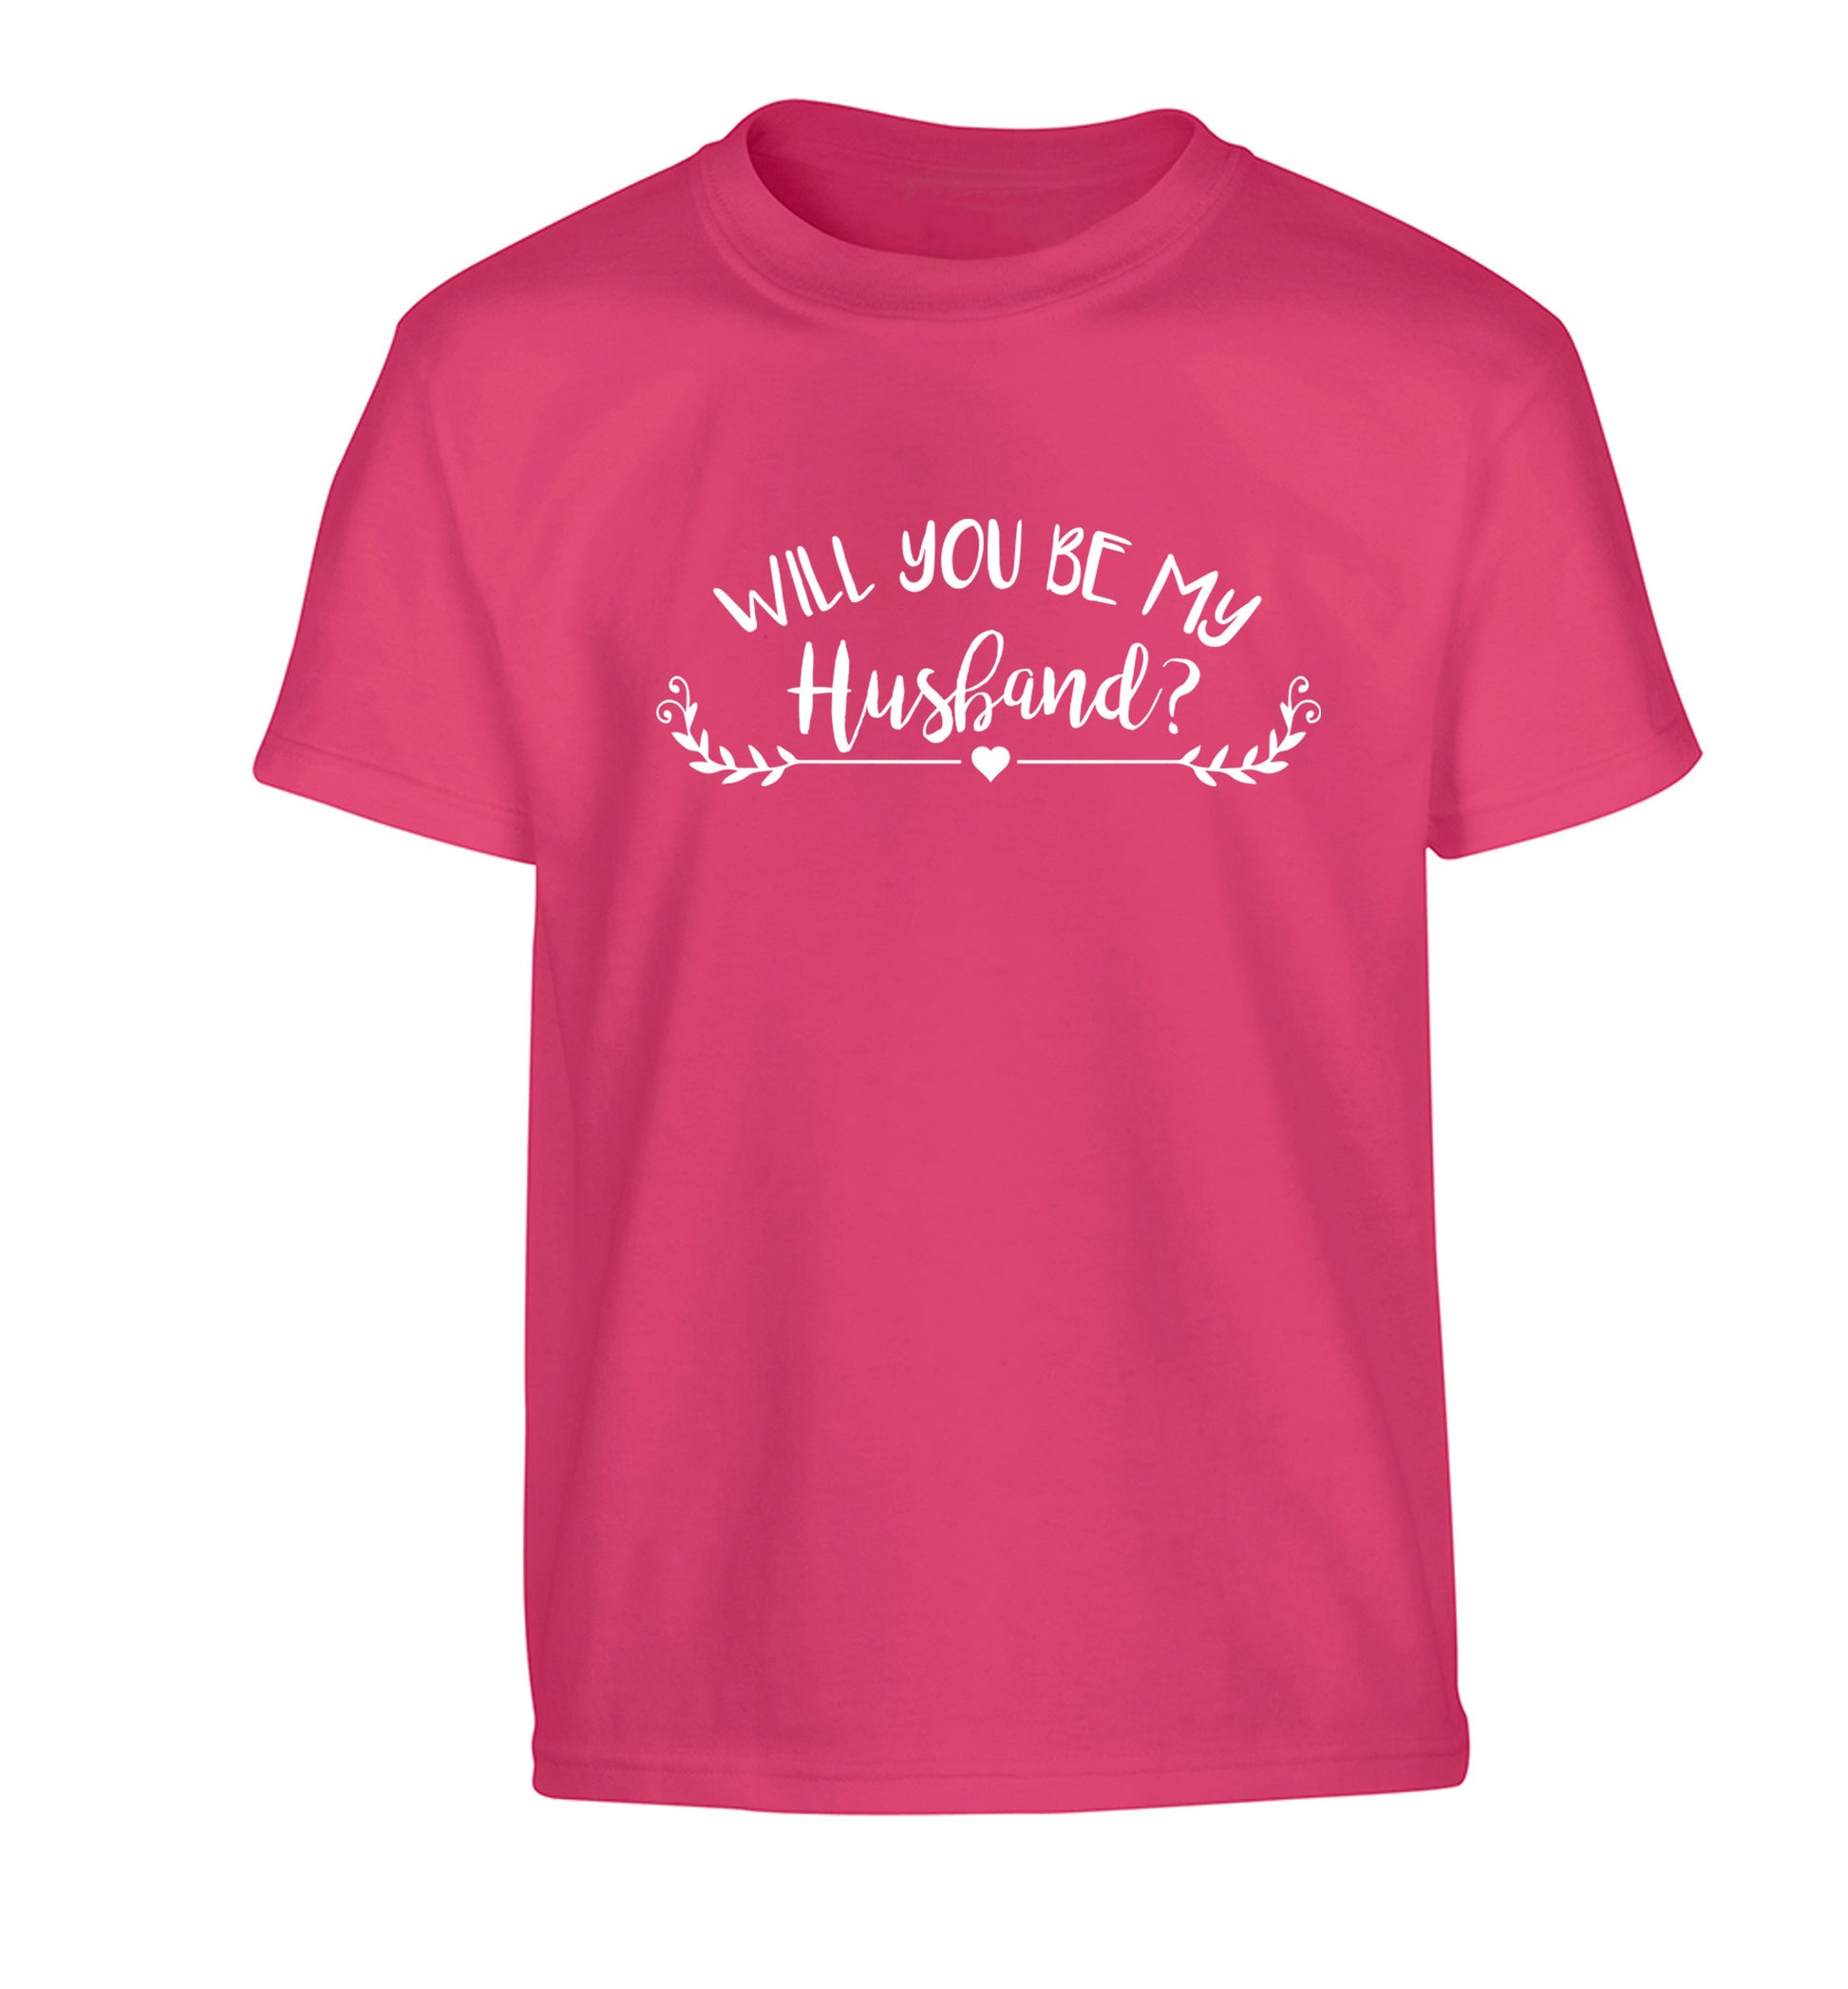 Will you be my husband? Children's pink Tshirt 12-14 Years